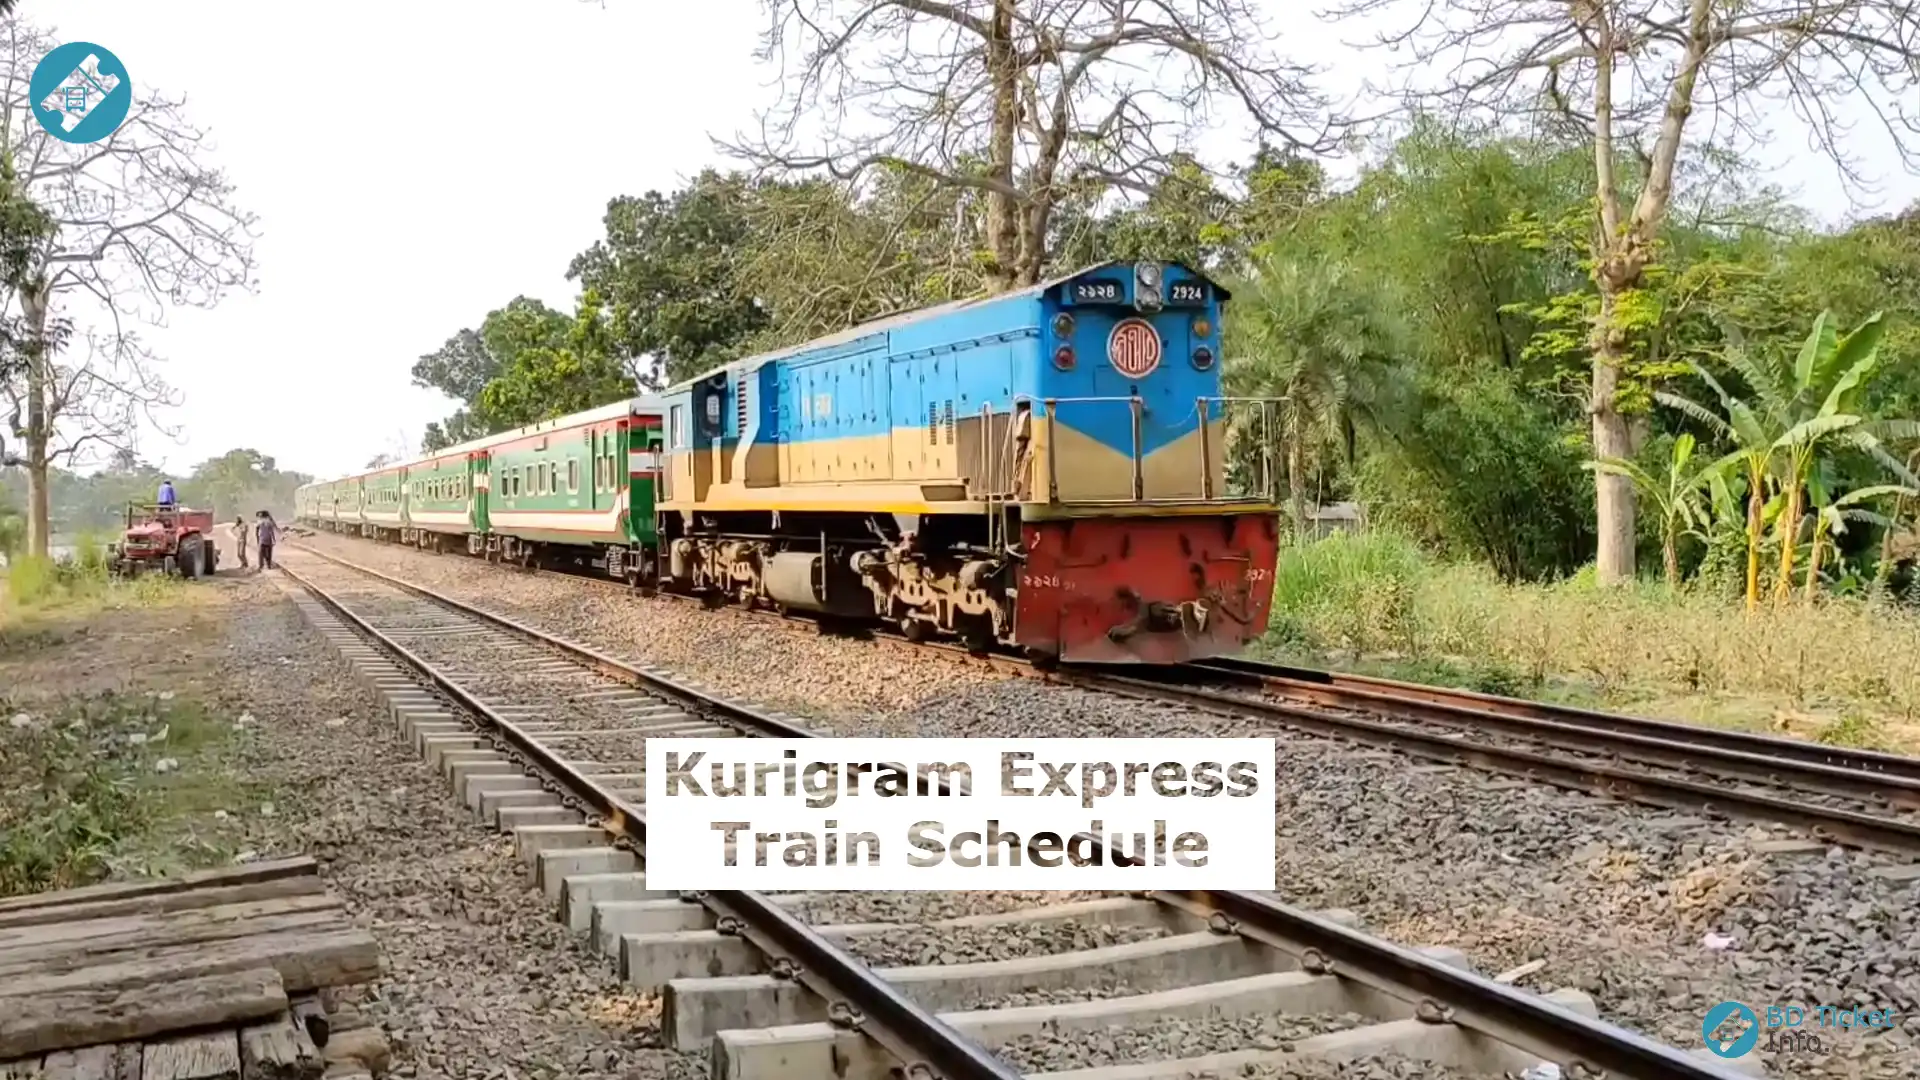 Kurigram Express Train Schedule and Ticket Price